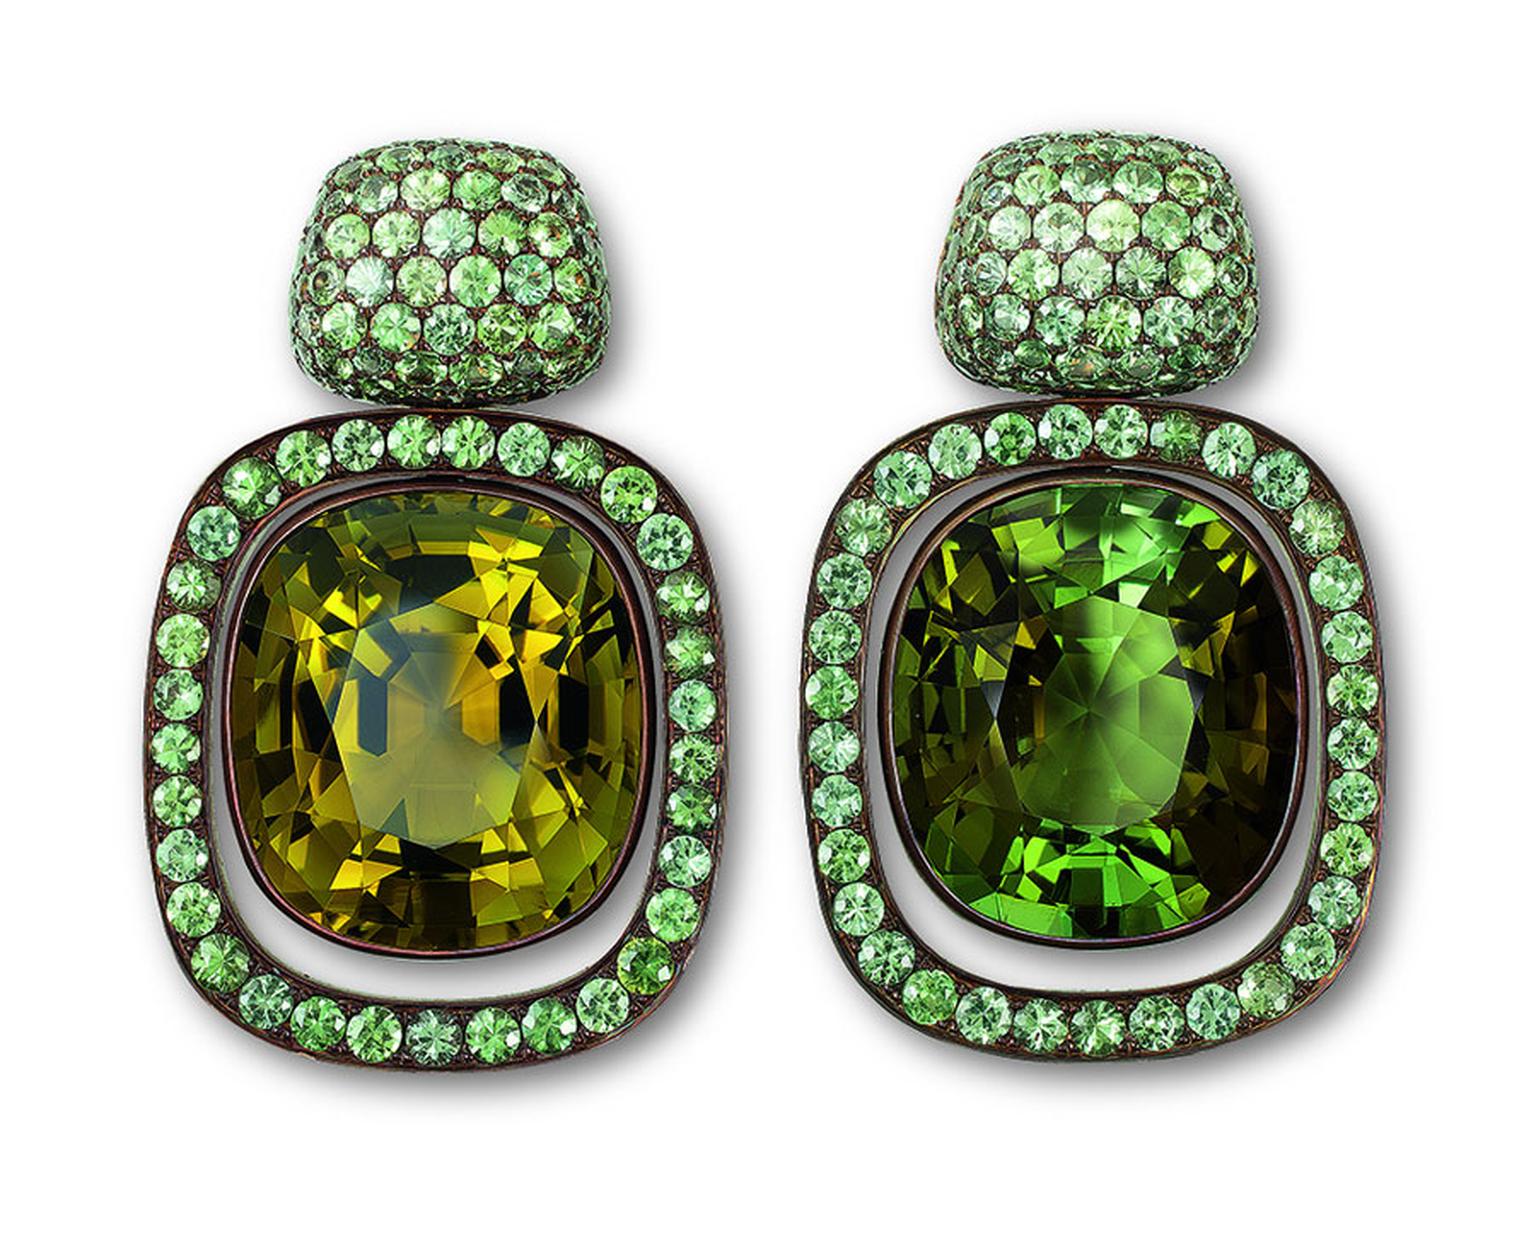 Hemmerle-earrings-copper-white-gold-olive-green-and-green-tourmalines-green-sapphires-0318.jpg